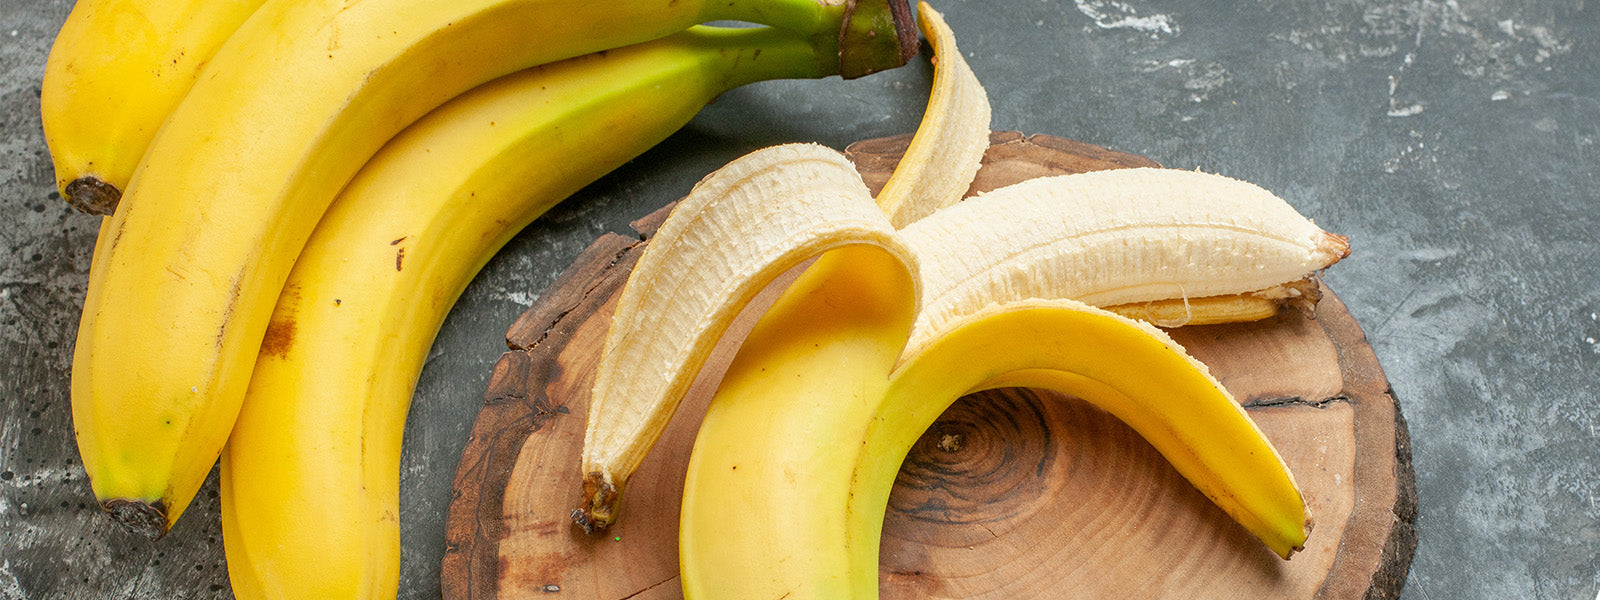 Health benefits of eating one banana everyday